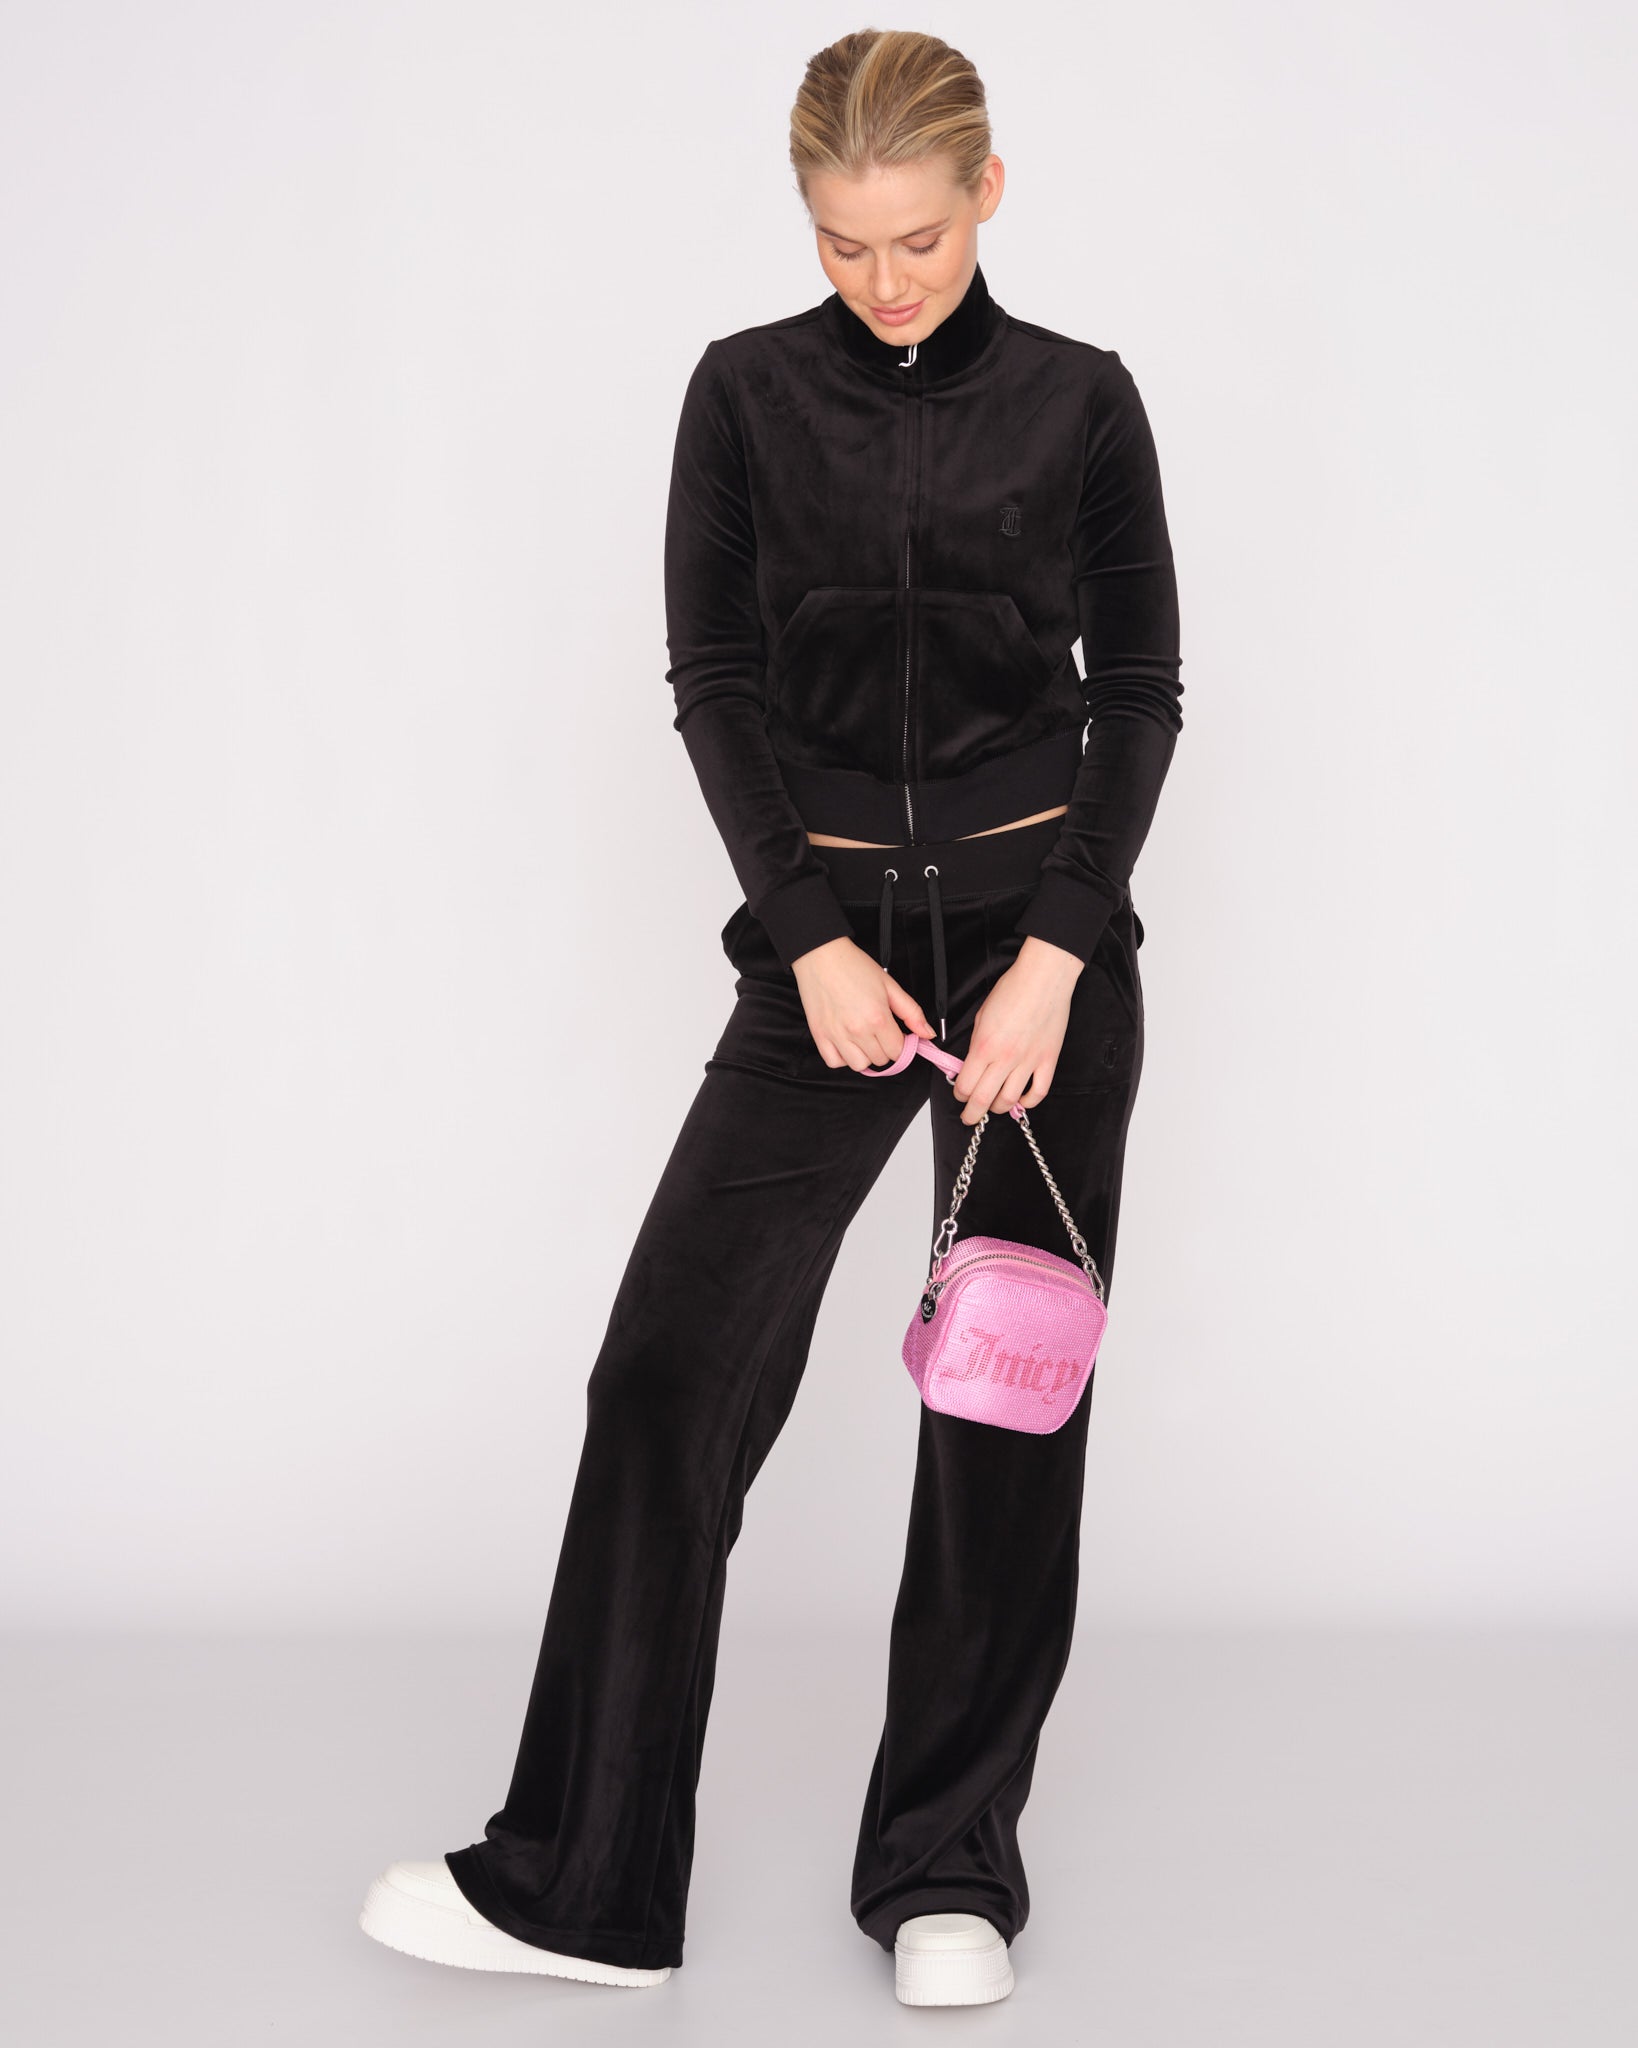 Hazel Squared Clutch Pink - Juicy Couture Scandinavia